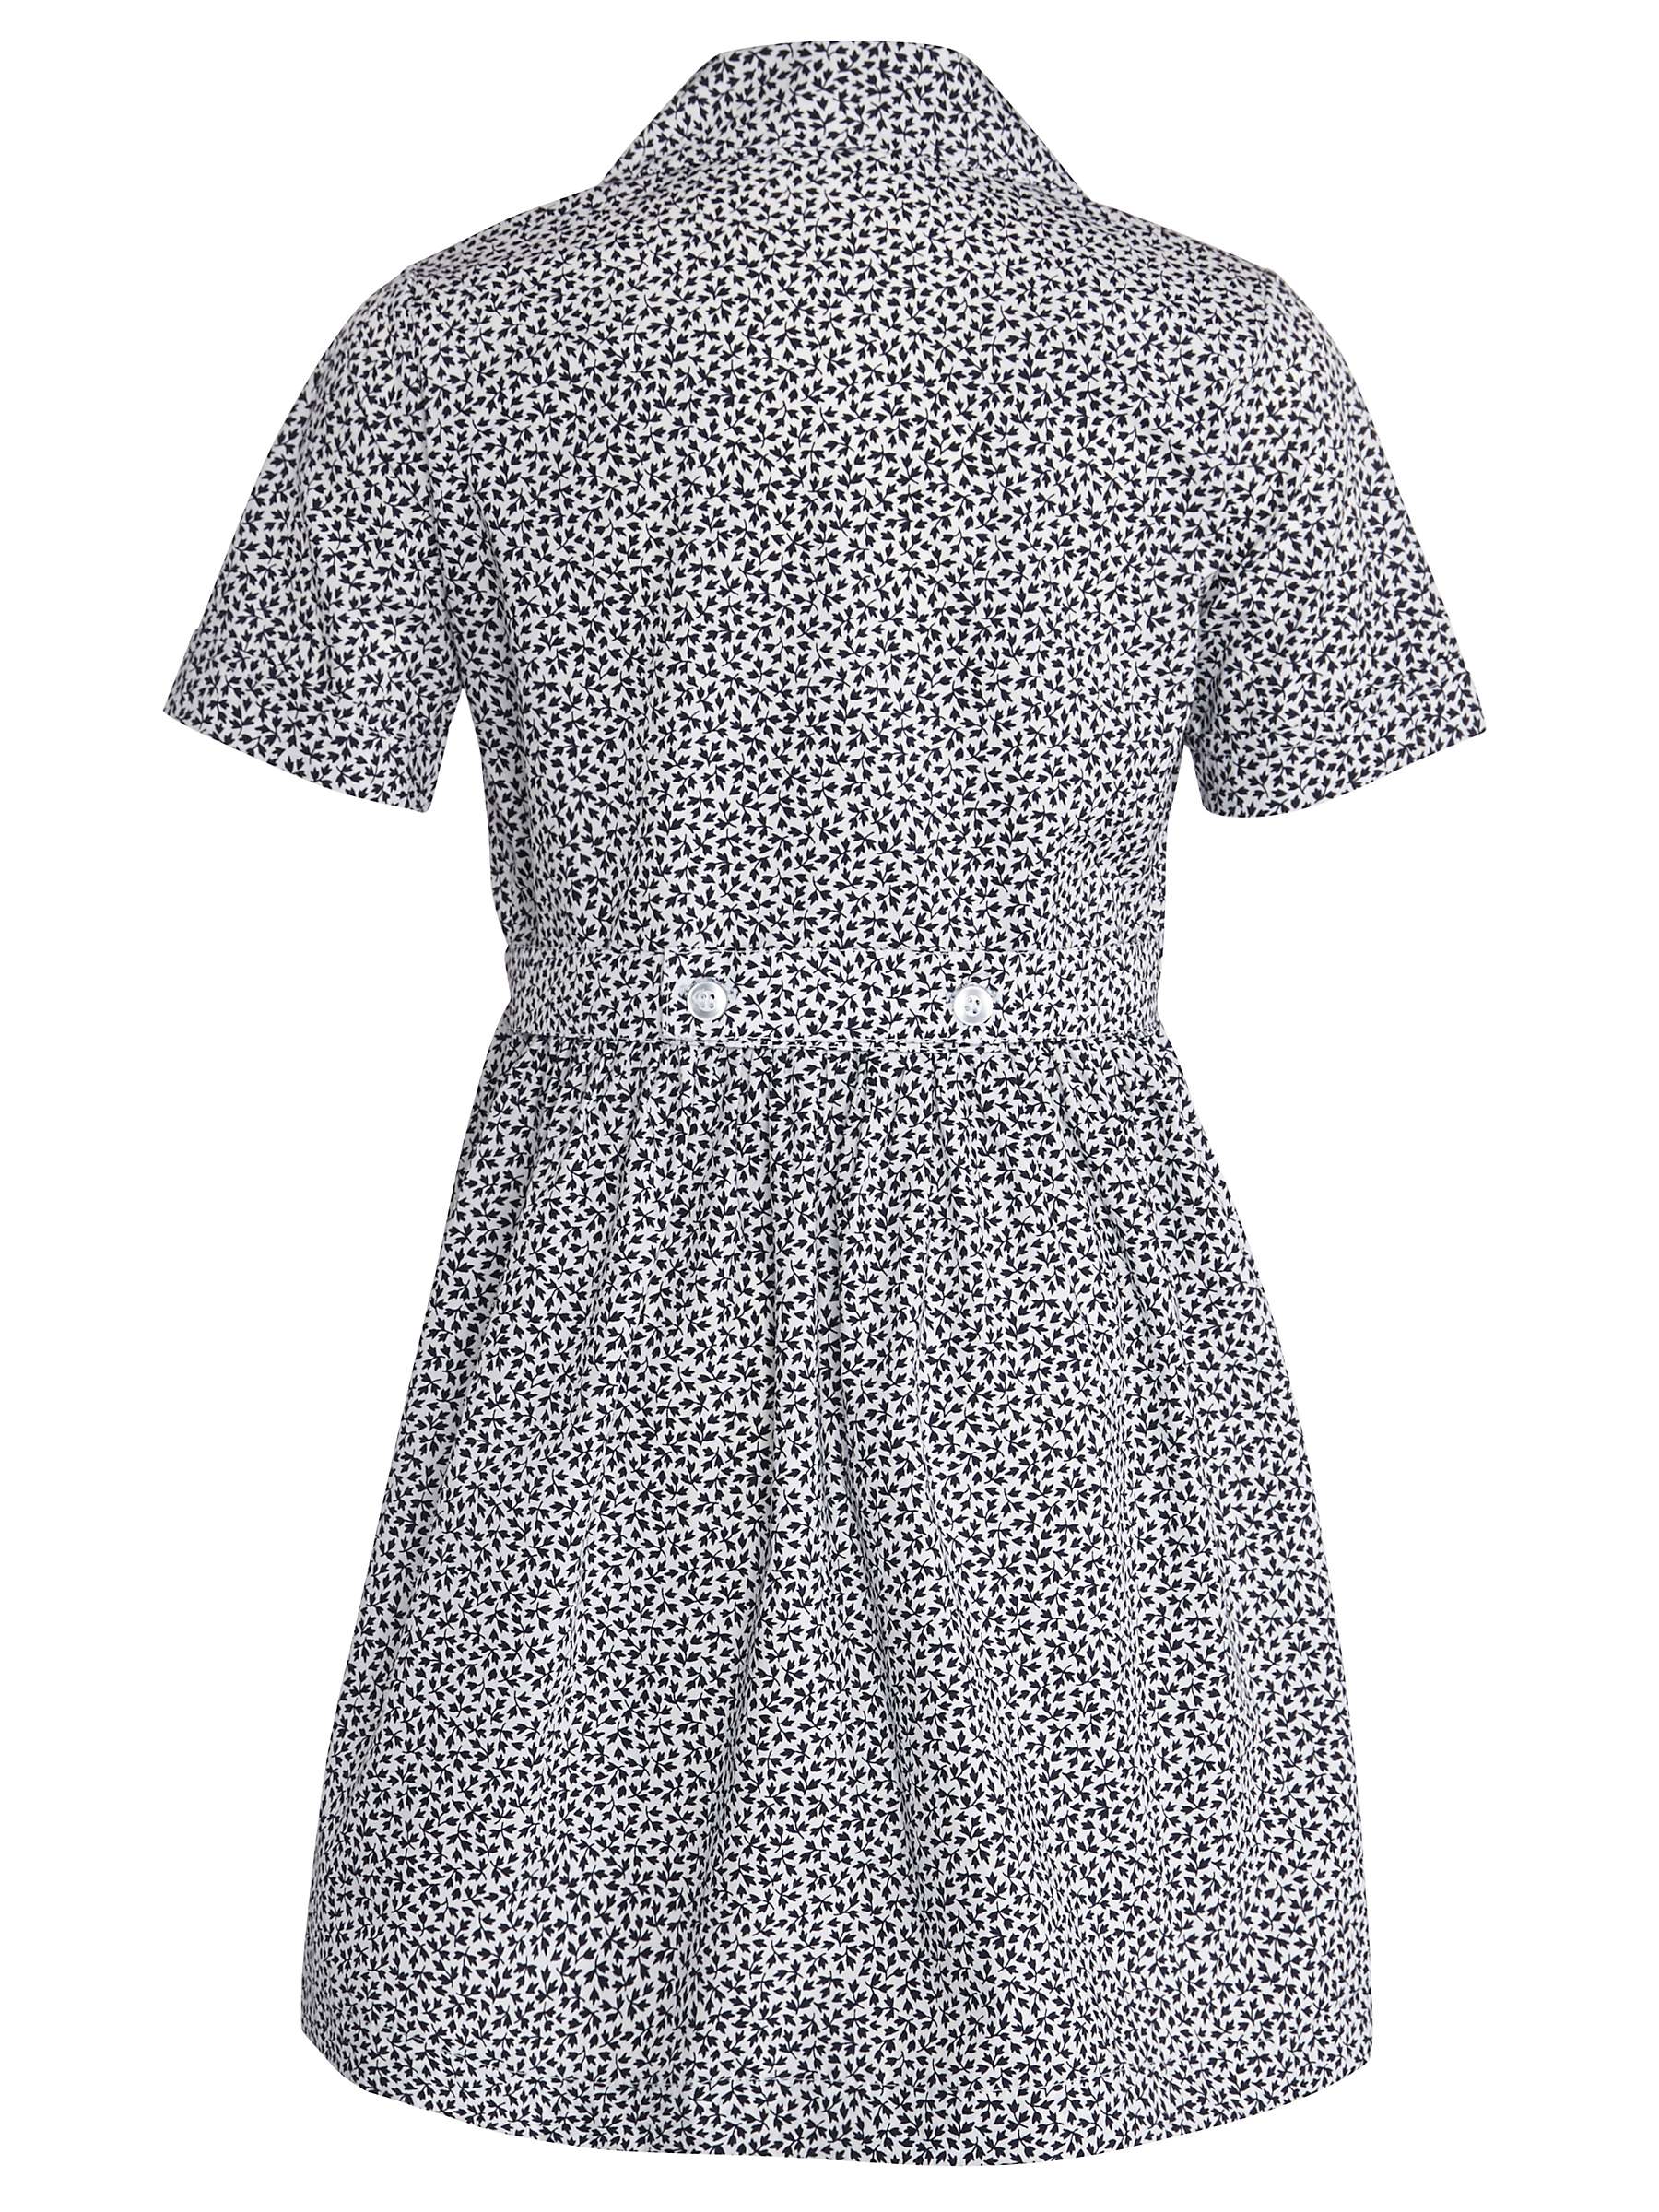 Buy Winchester House School Girls' Summer Dress, Navy Online at johnlewis.com